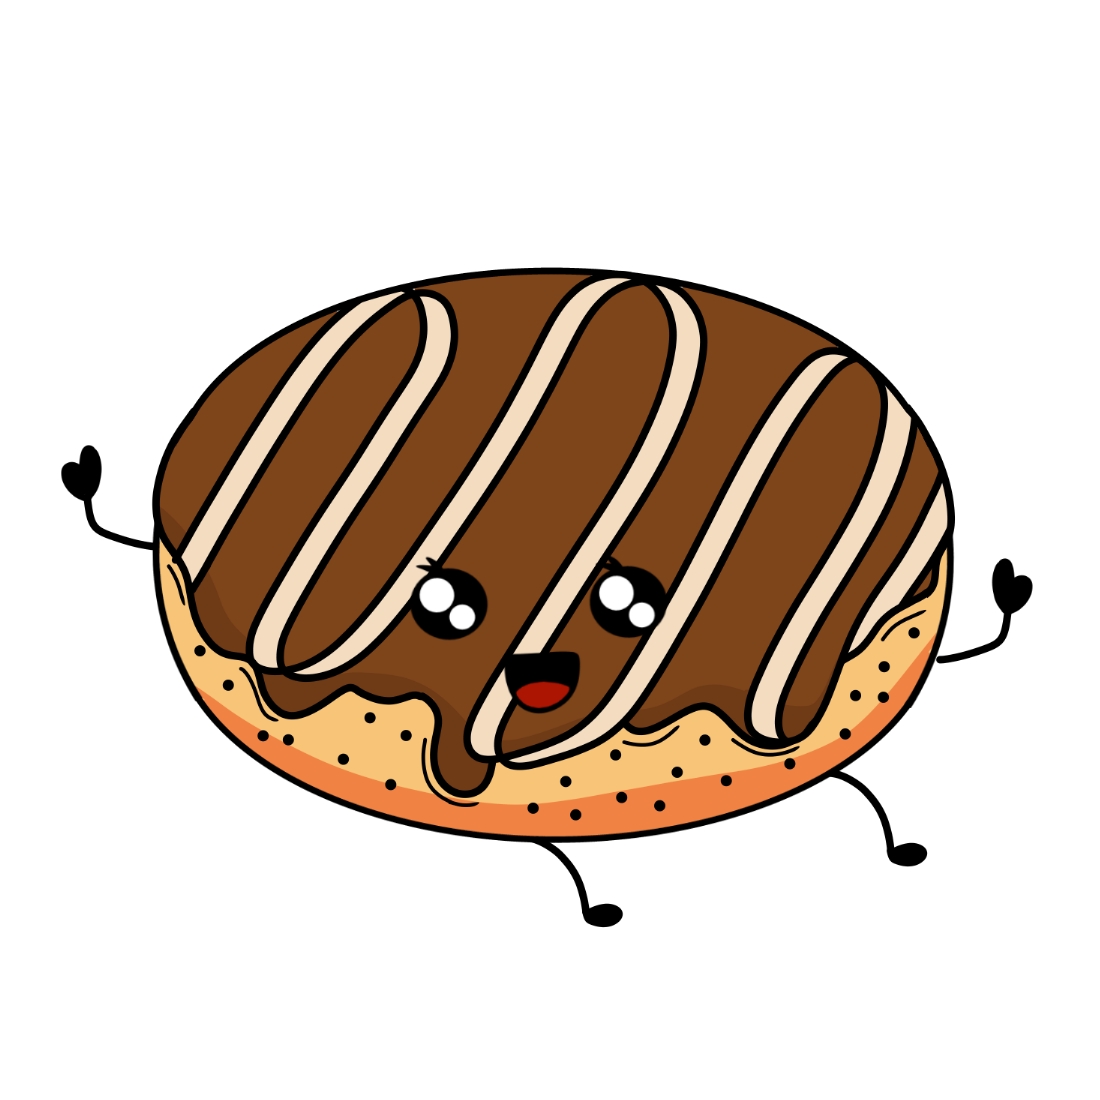 Cute Hand-drawn Kawaii Donut chocolate.